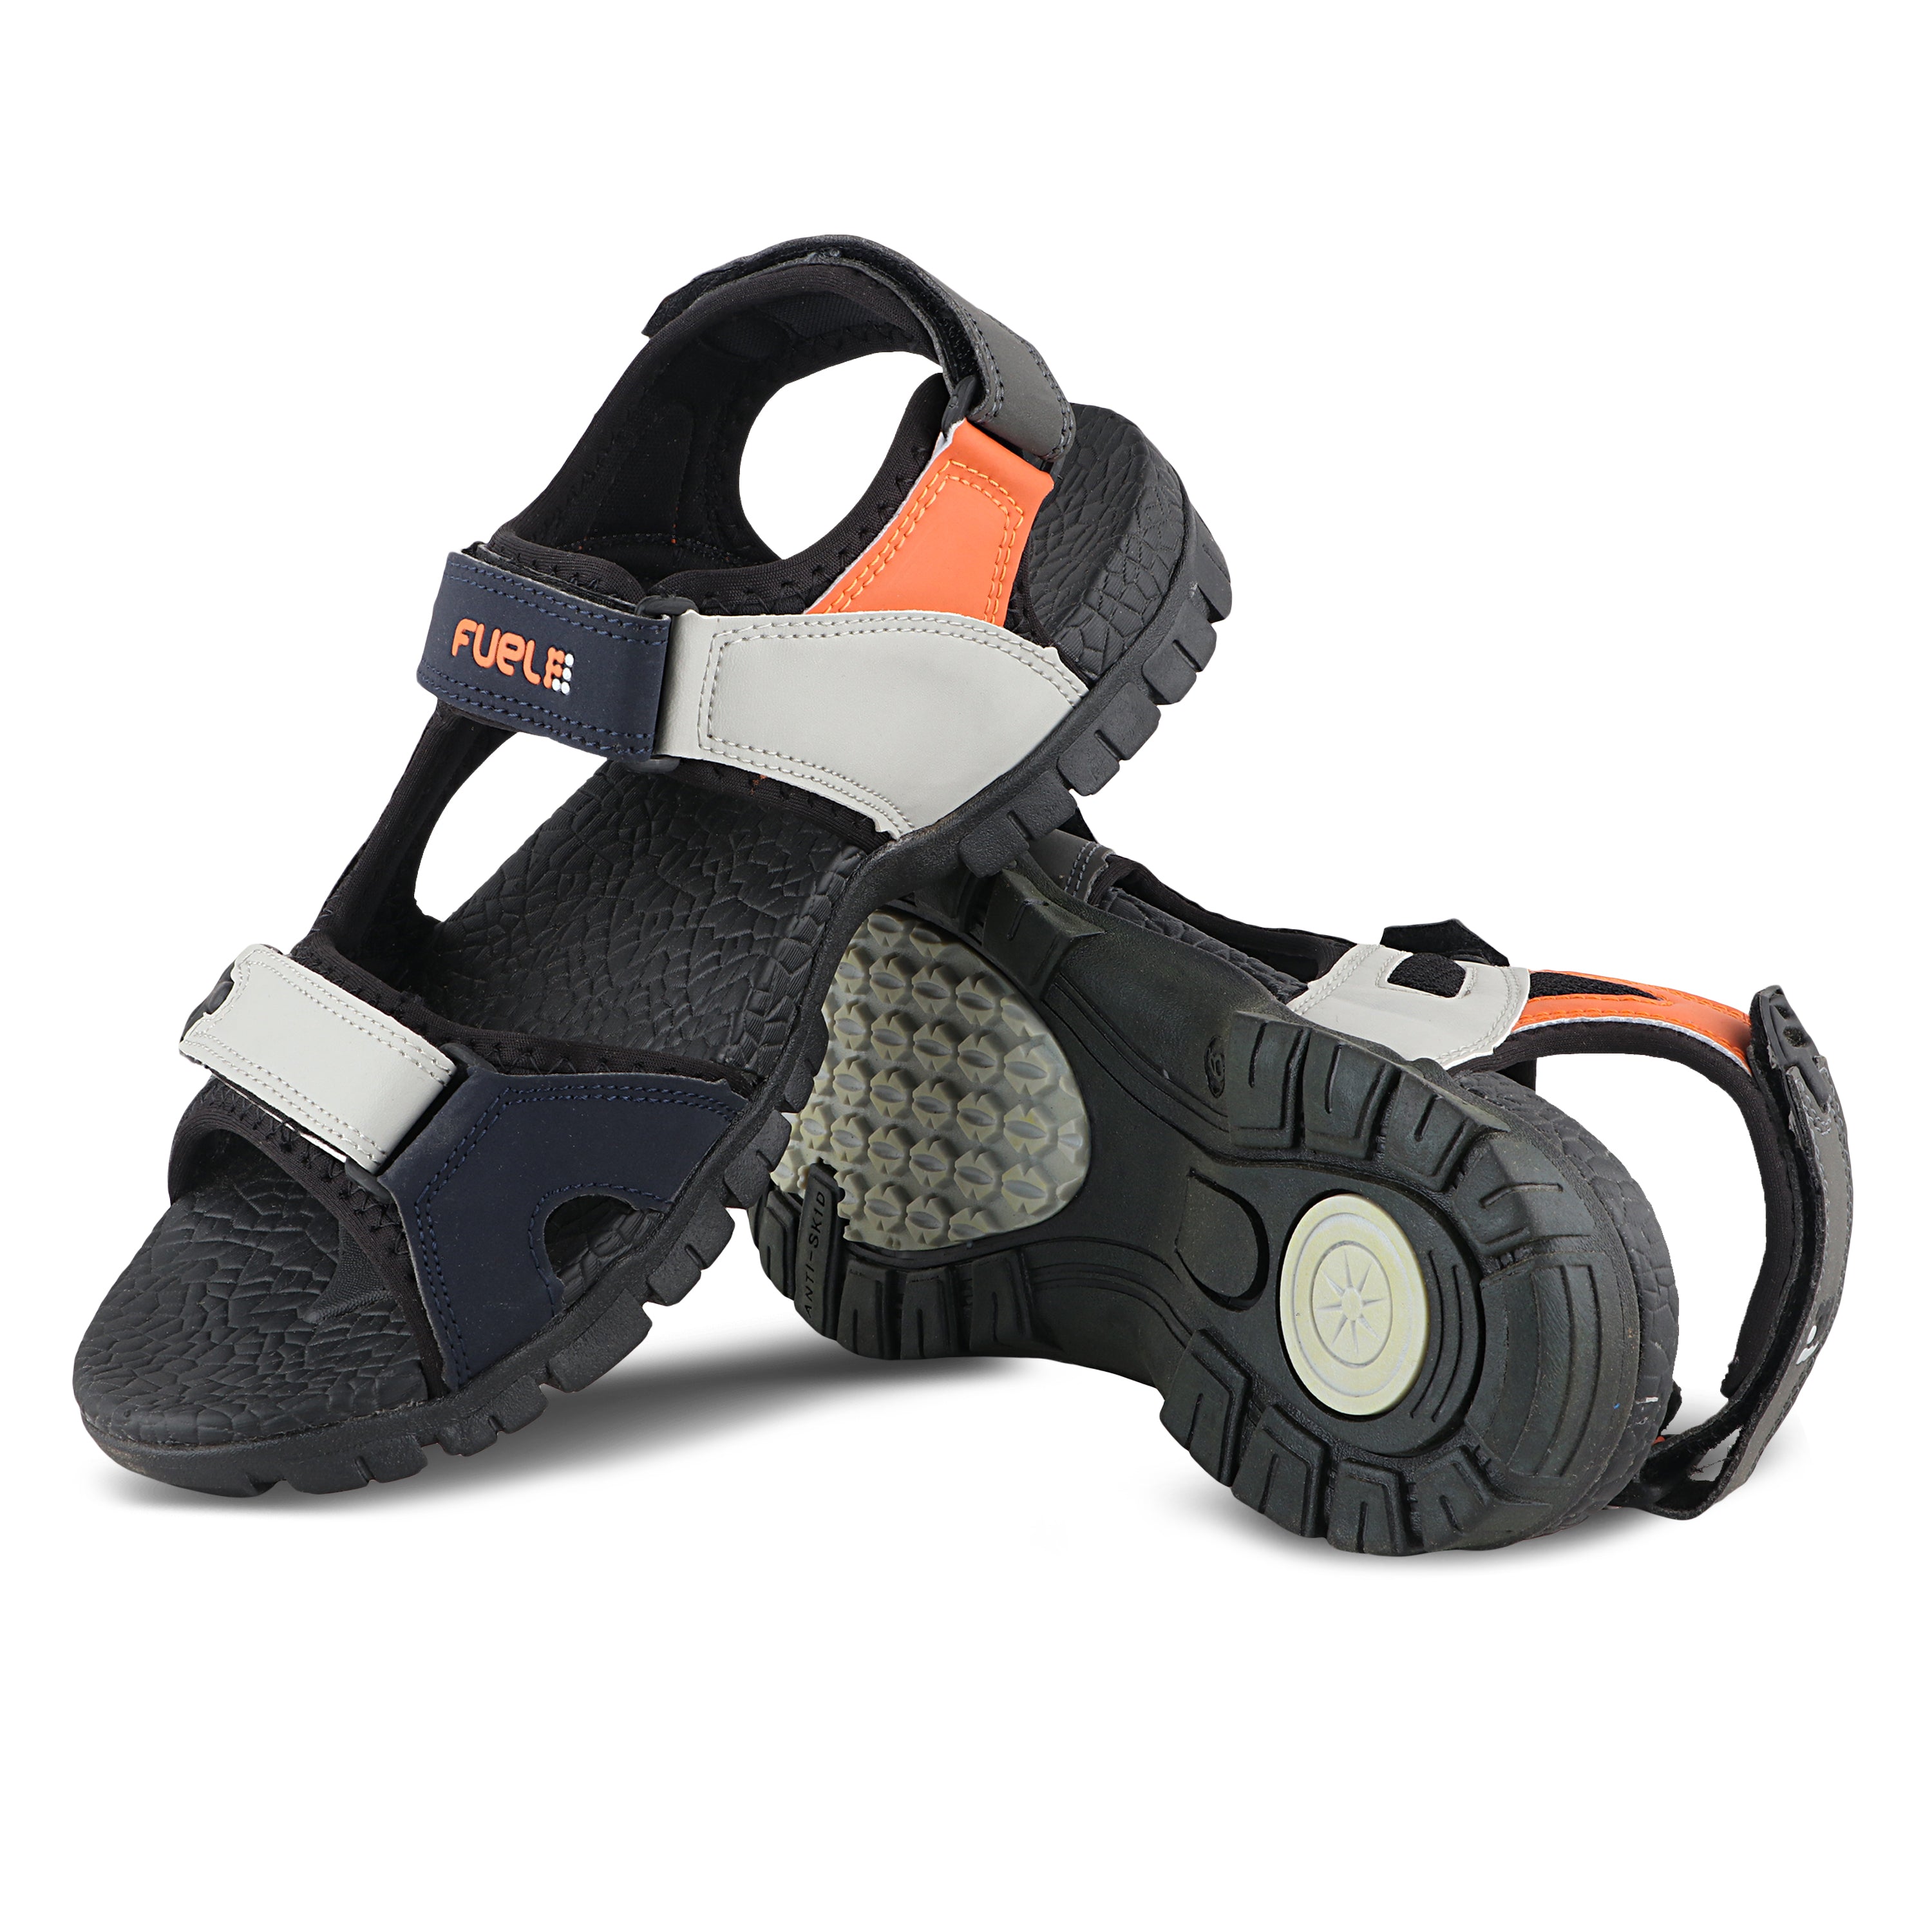 Fuel Rambo-01 Sandals For Men's (Black-Orange)